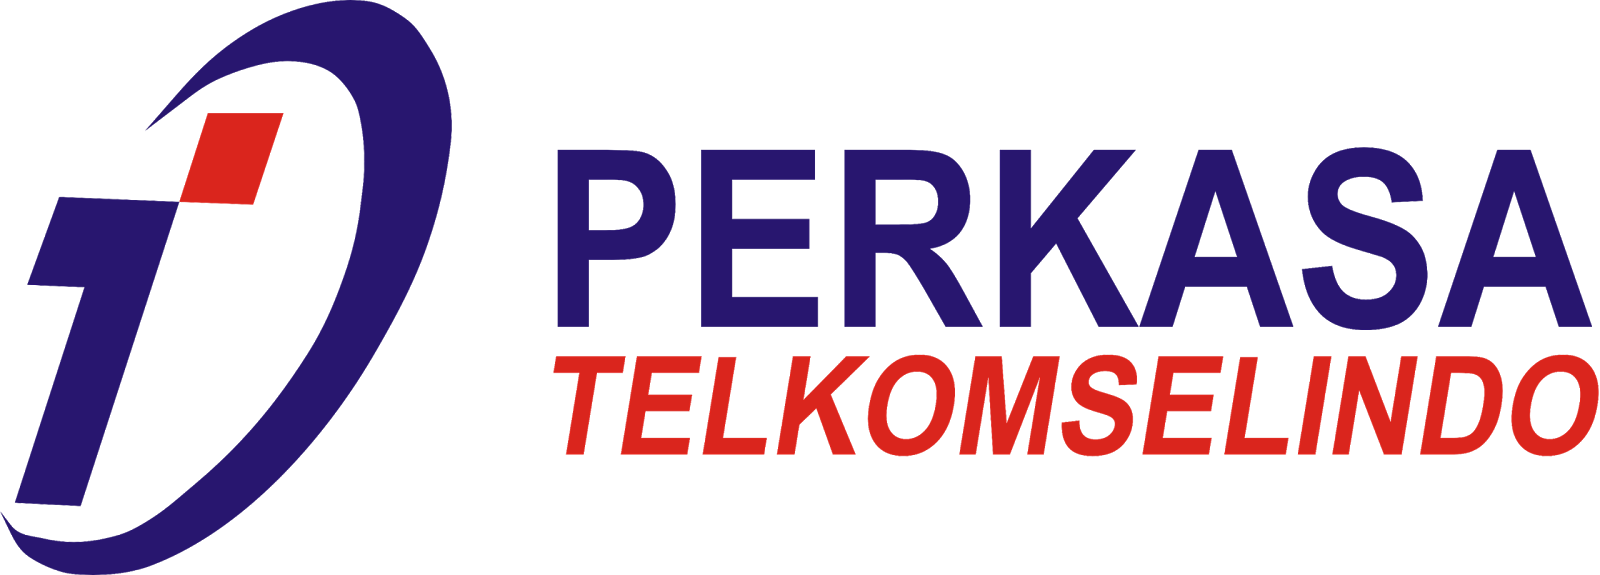 Lowongan Kerja di Perkasa Telkomselindo - Semarang, Demak, Jepara